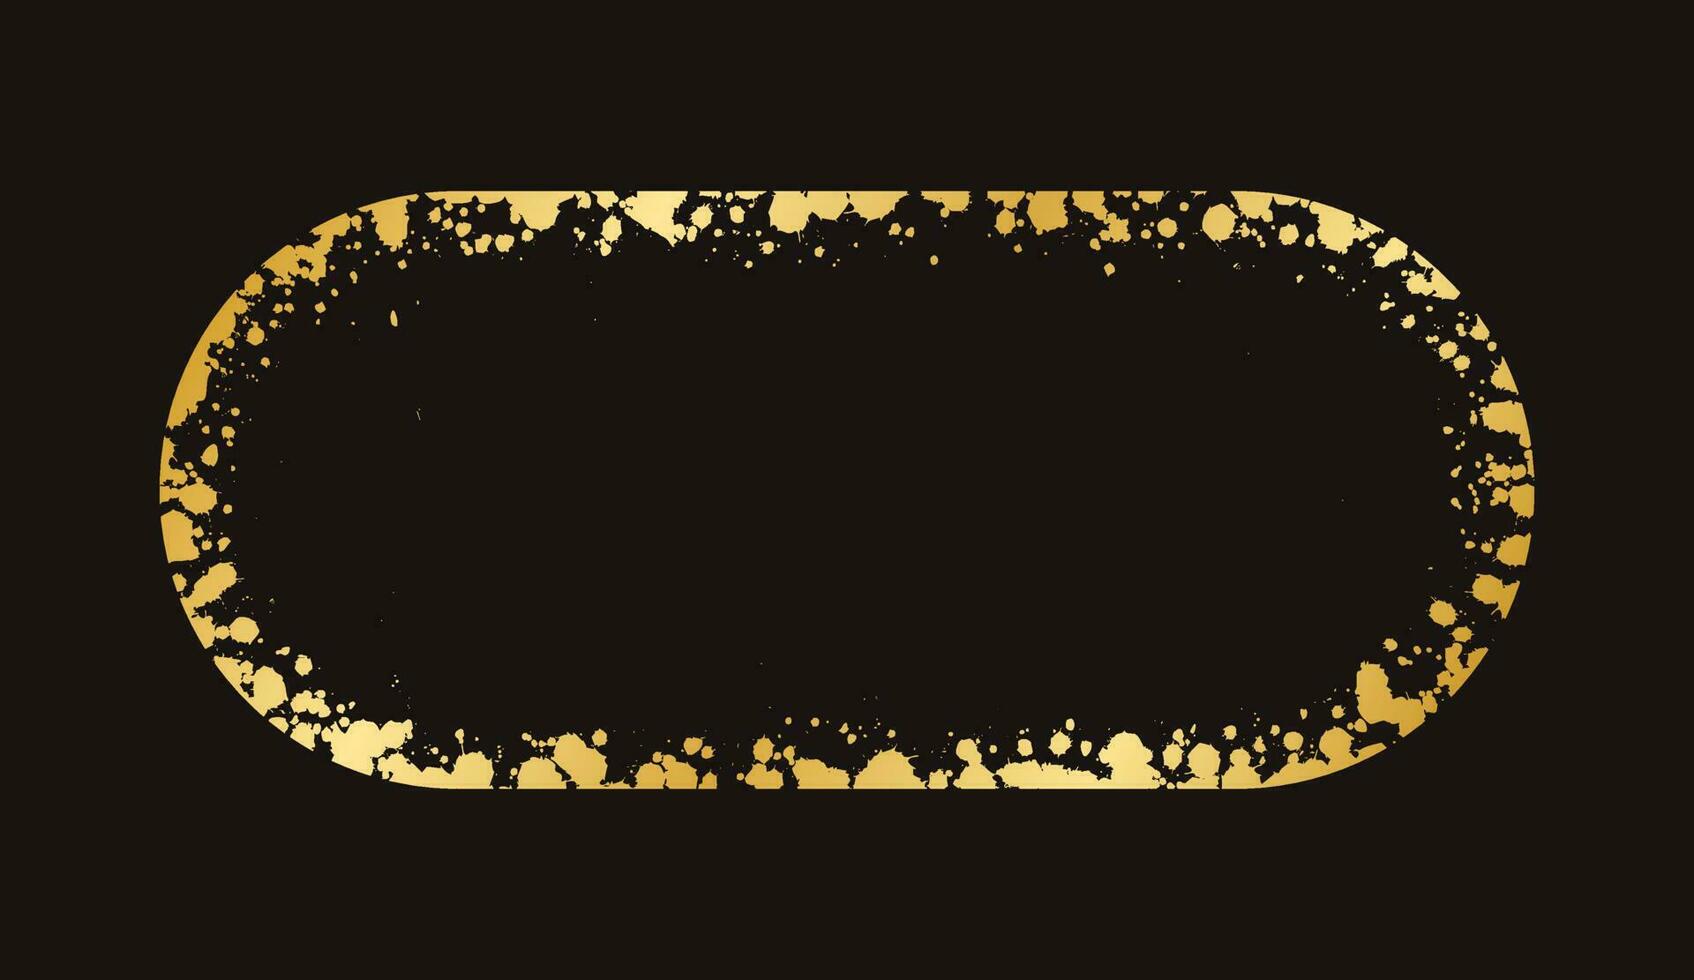 Abstract Gold Ink Splatter Frame. Golden foil spray banner border template. vector